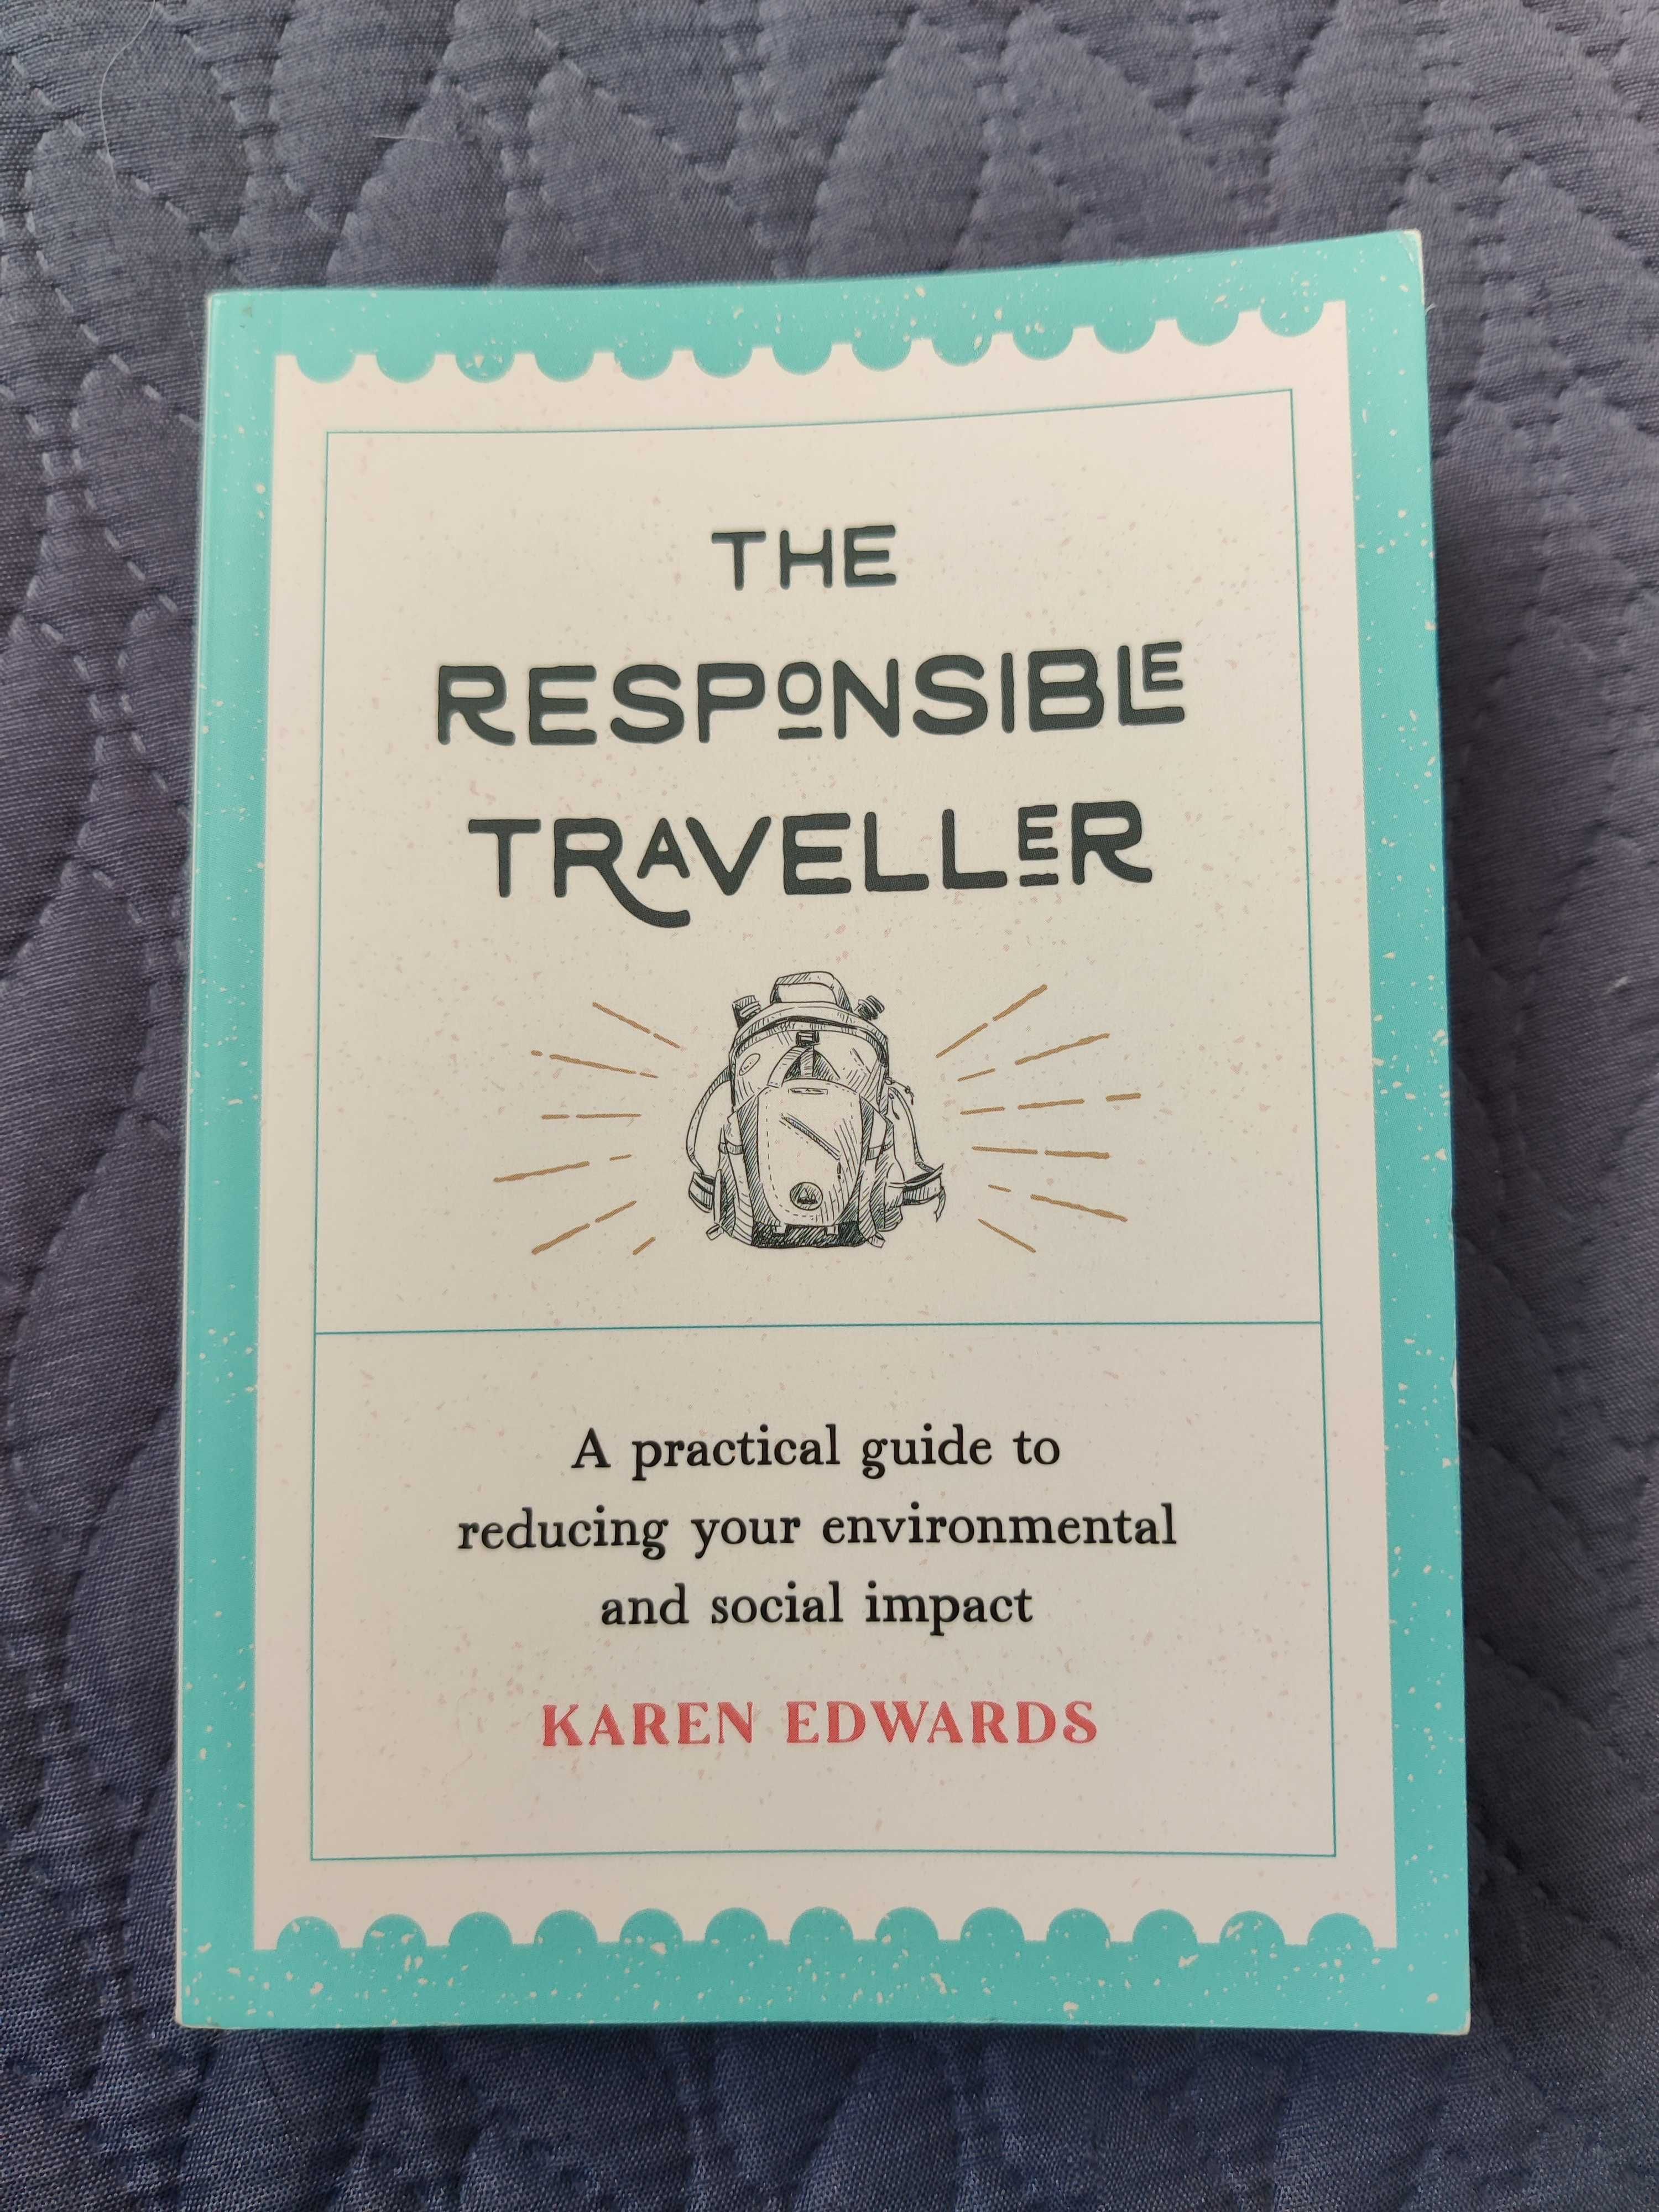 Livro "The Responsible Traveller" de Karen Edwards